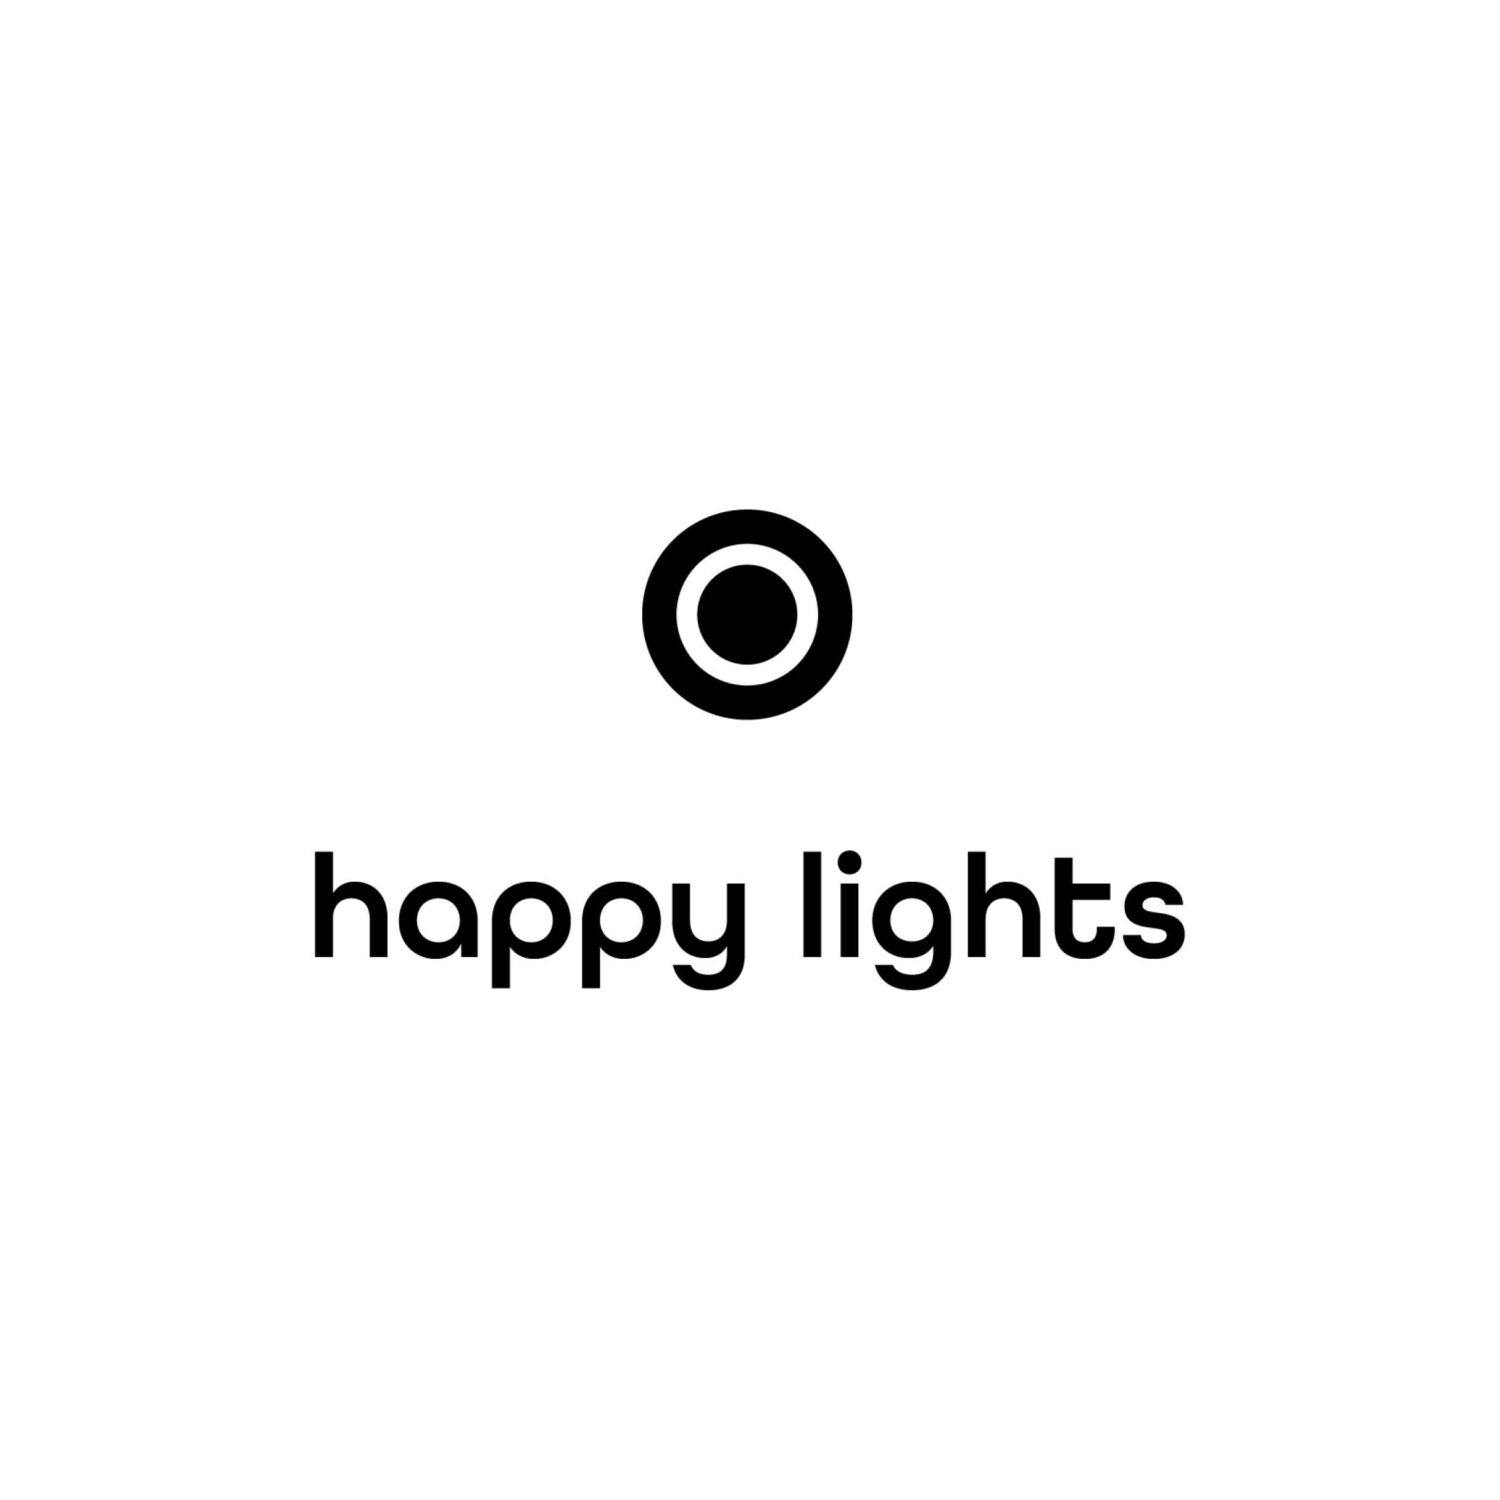 Happy lights